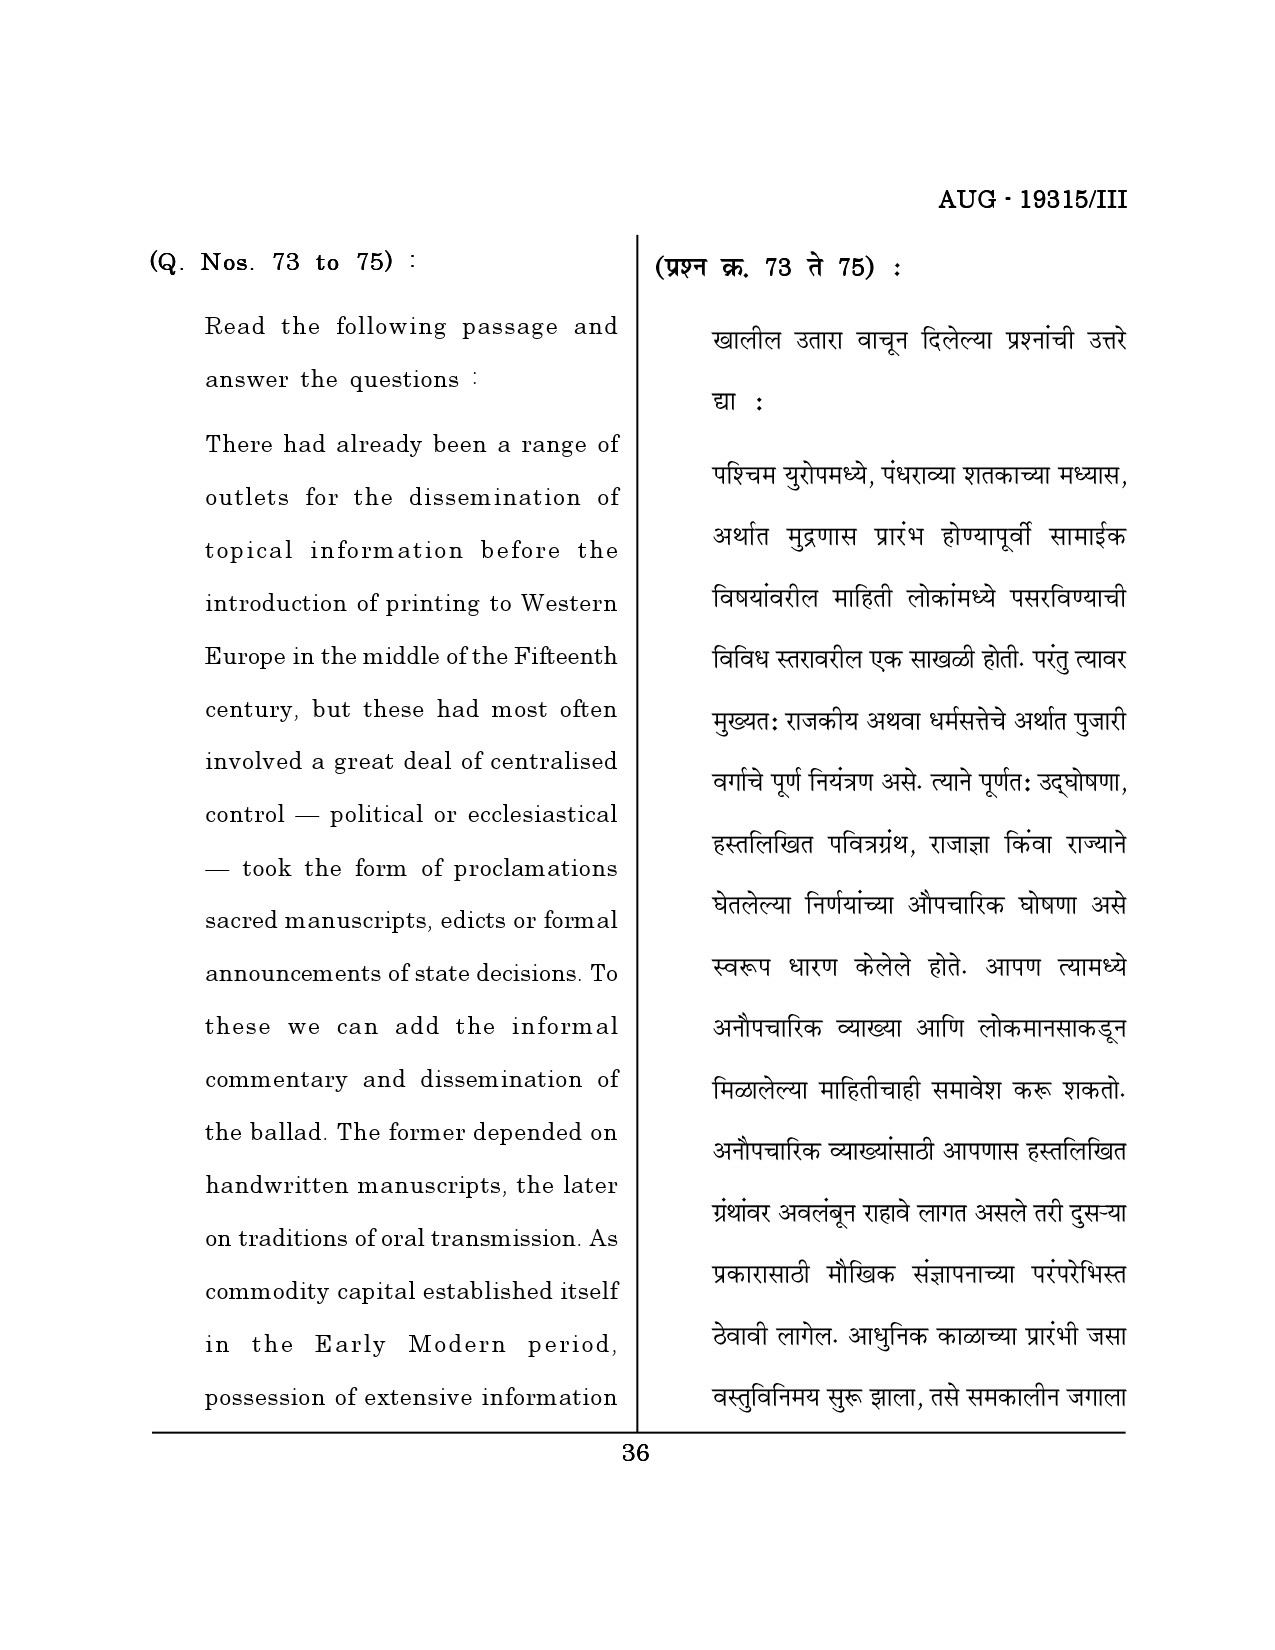 Maharashtra SET Journalism and Mass Communication Question Paper III August 2015 35